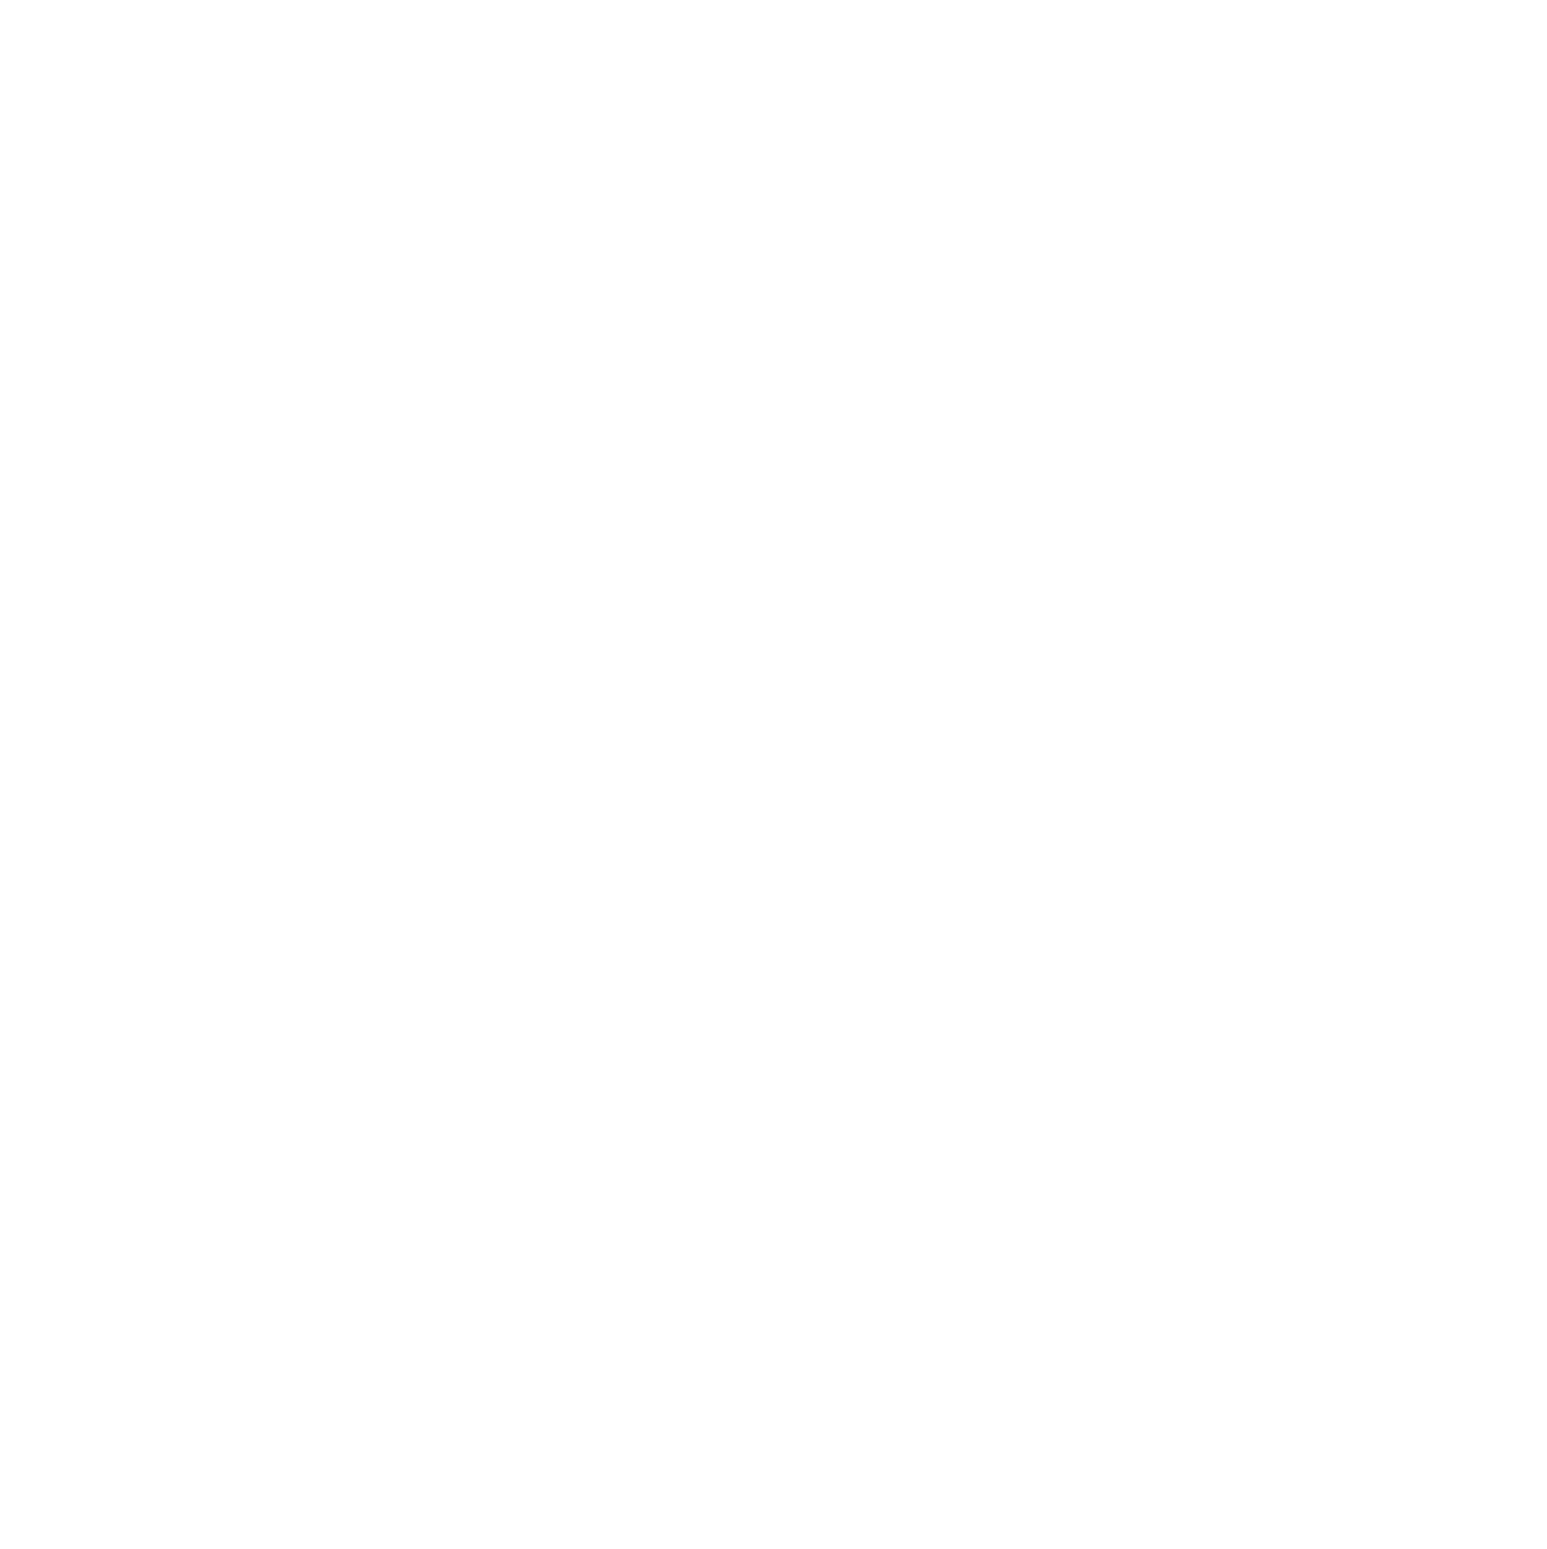 Westwood Holdings Group logo for dark backgrounds (transparent PNG)